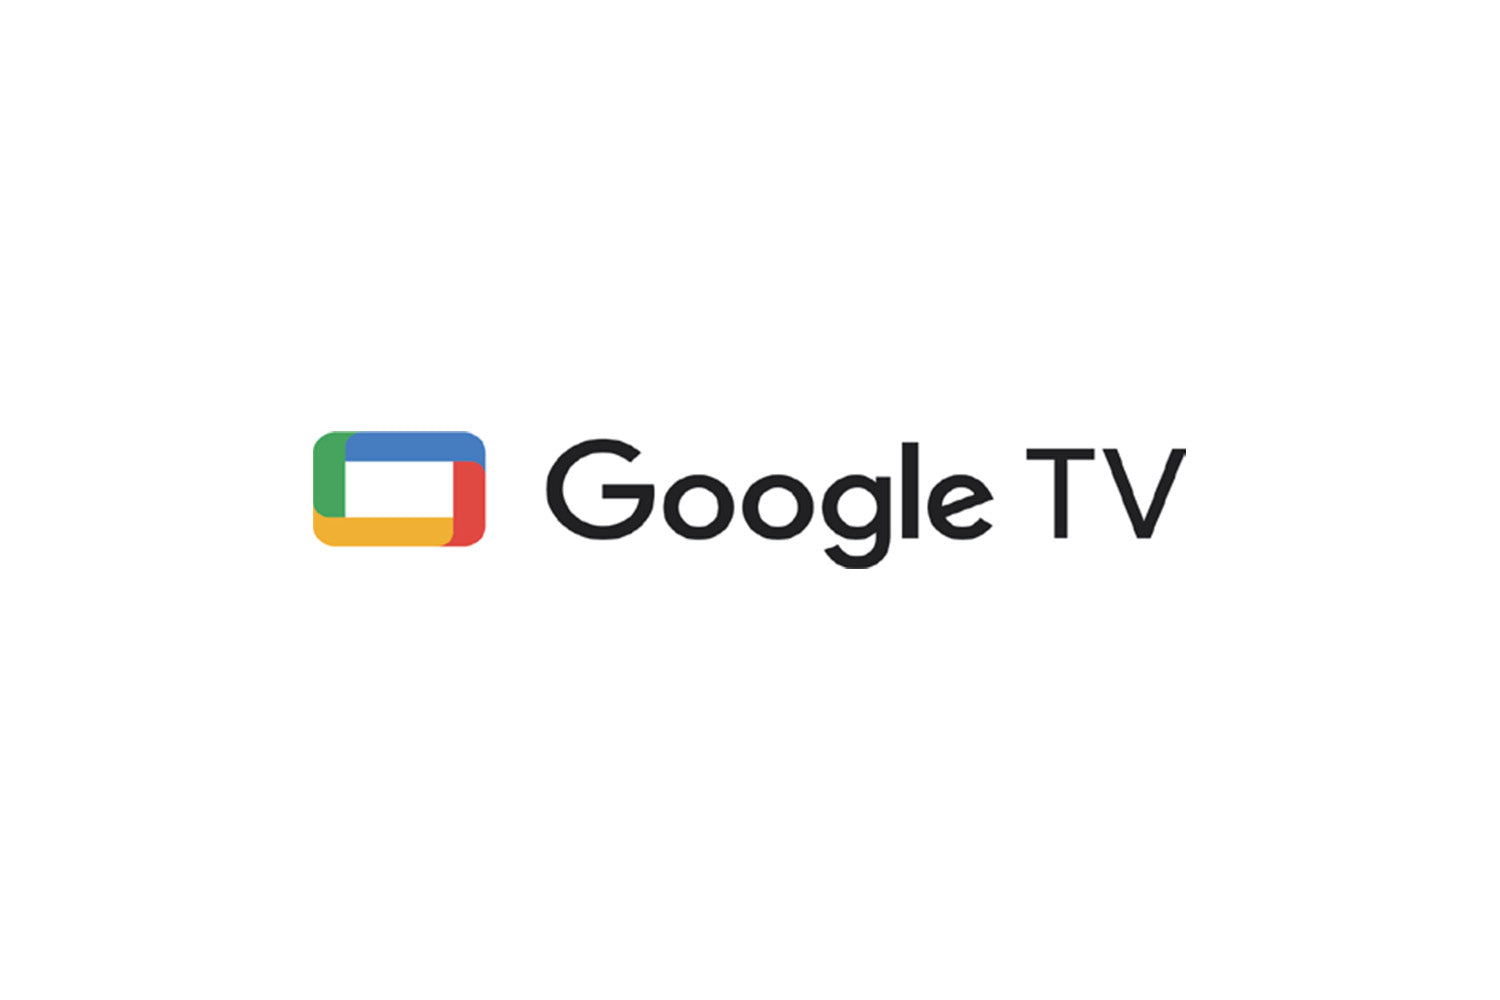 Google TV licensed brand